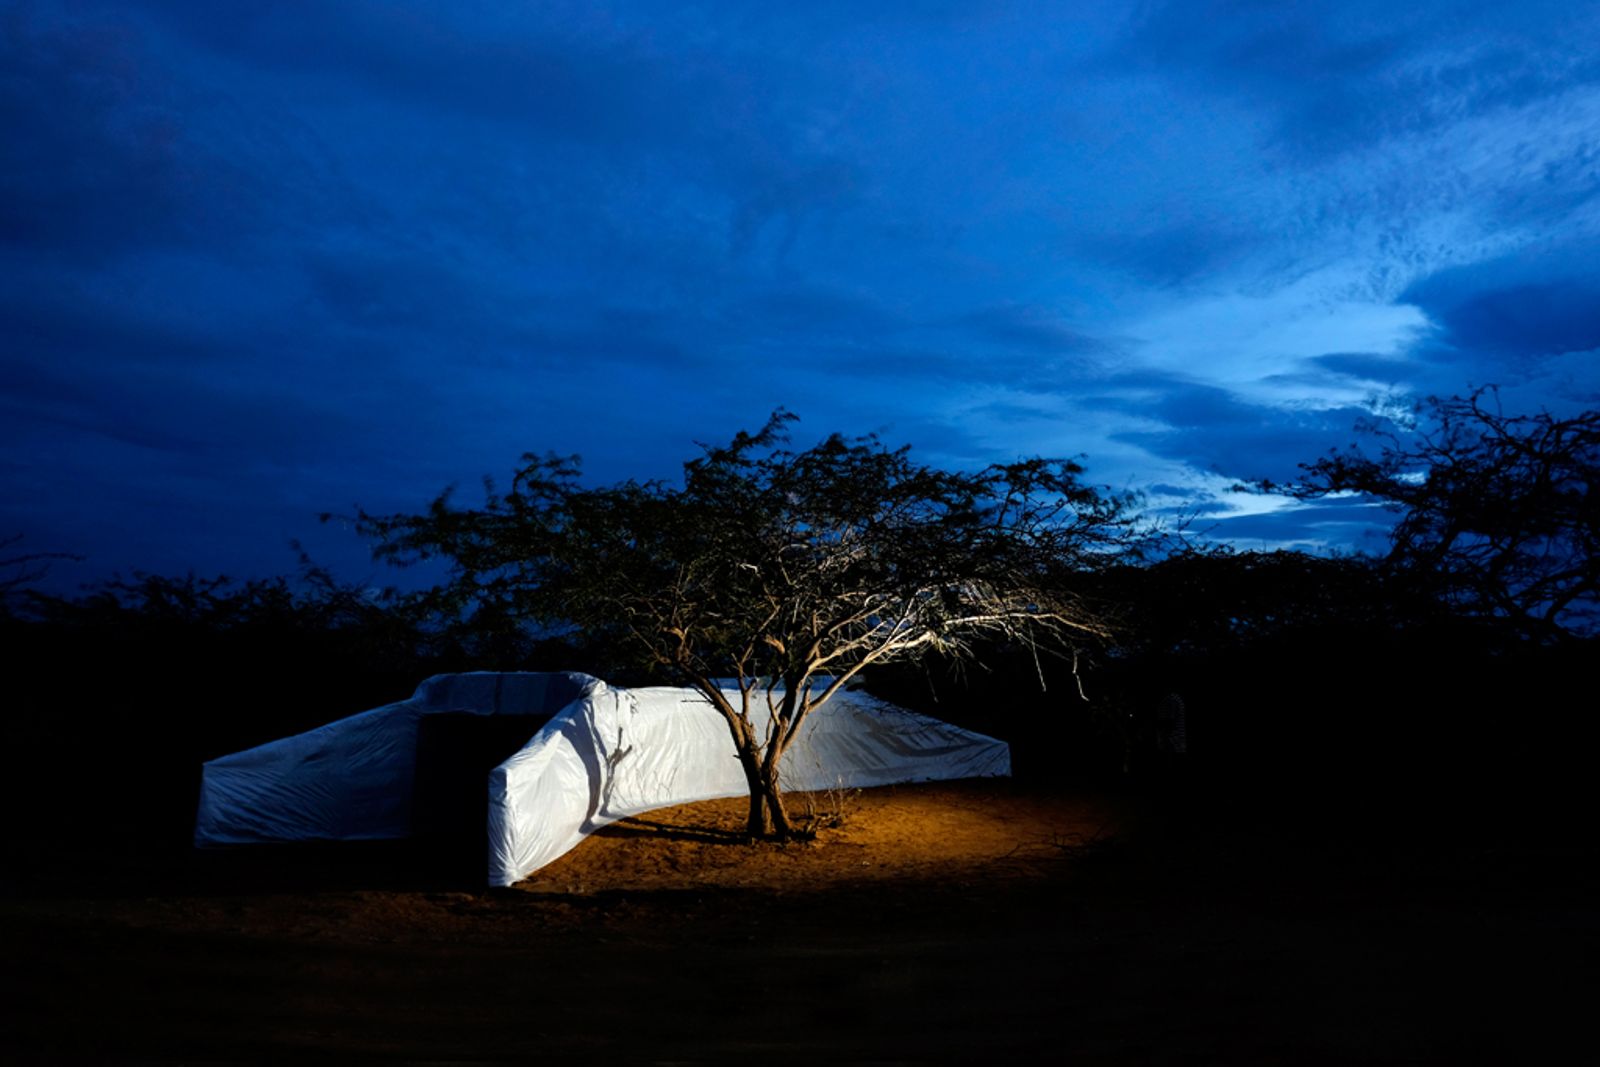 © Santiago Escobar-Jaramillo - The "White Elephant" resting at night.